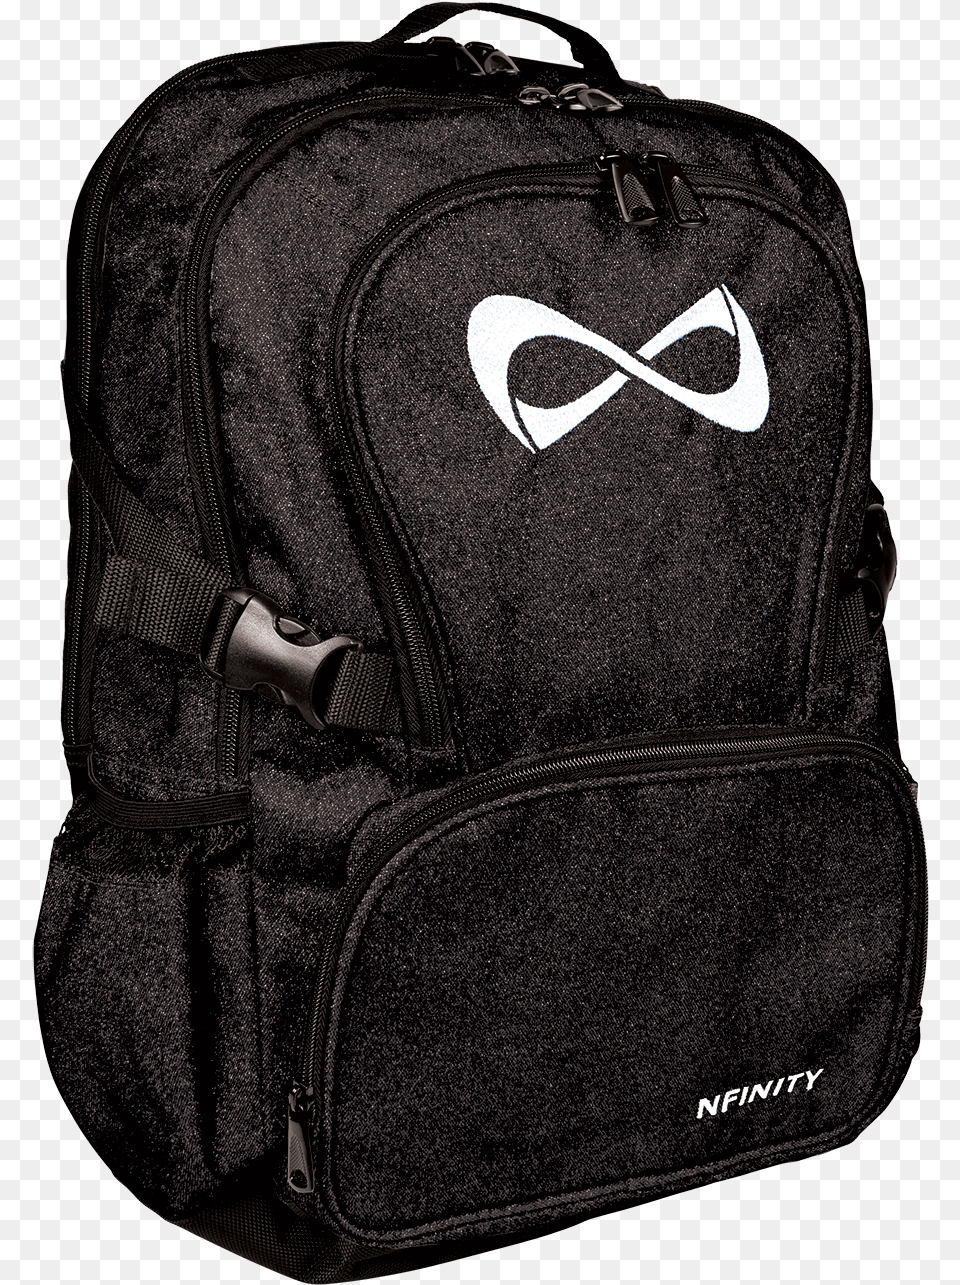 Nfinity Sparkle Backpack Nfinity Backpack, Bag Png Image